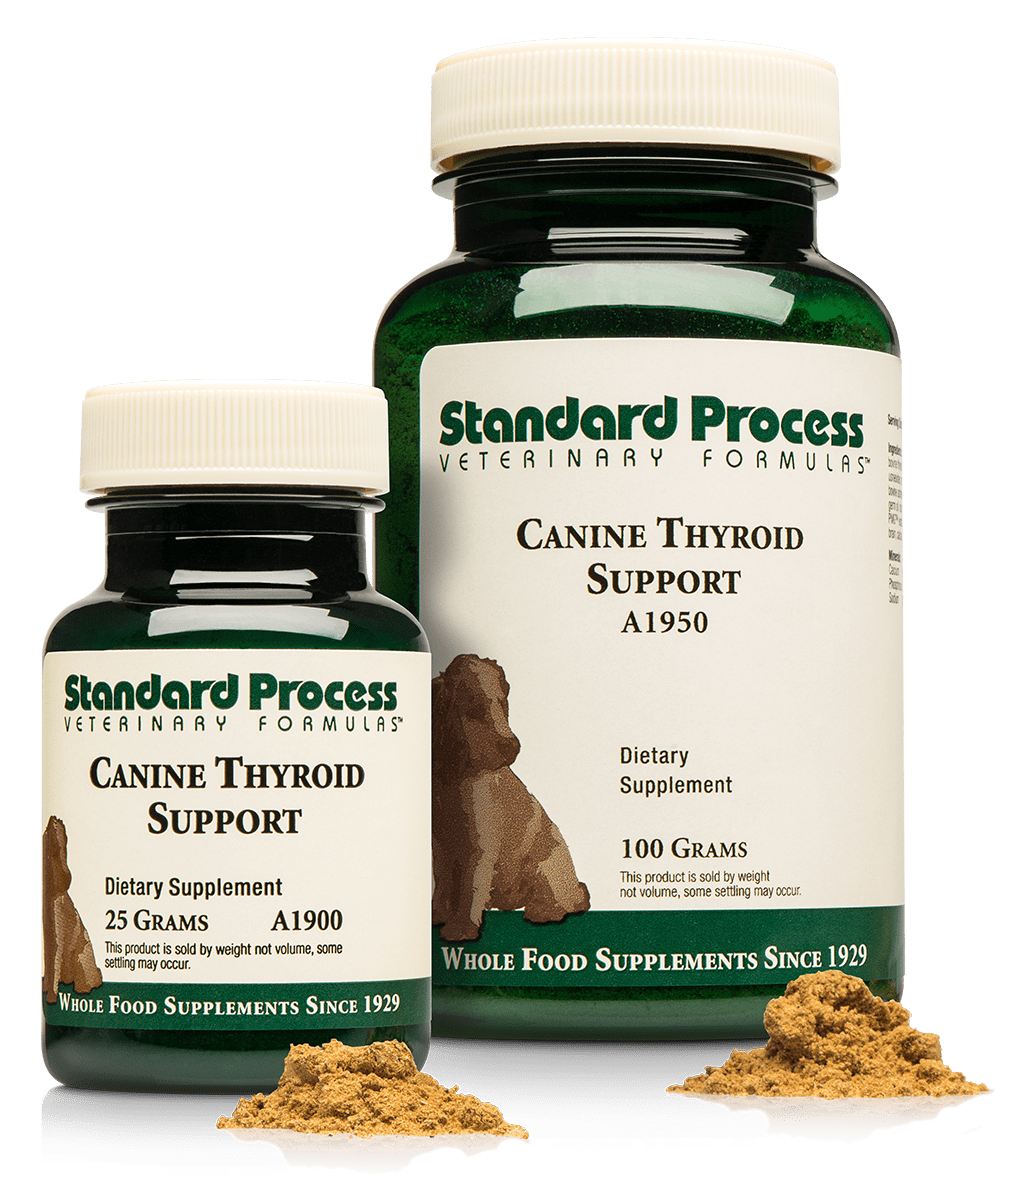 Standard Process Canine Thyroid Support 25g powder